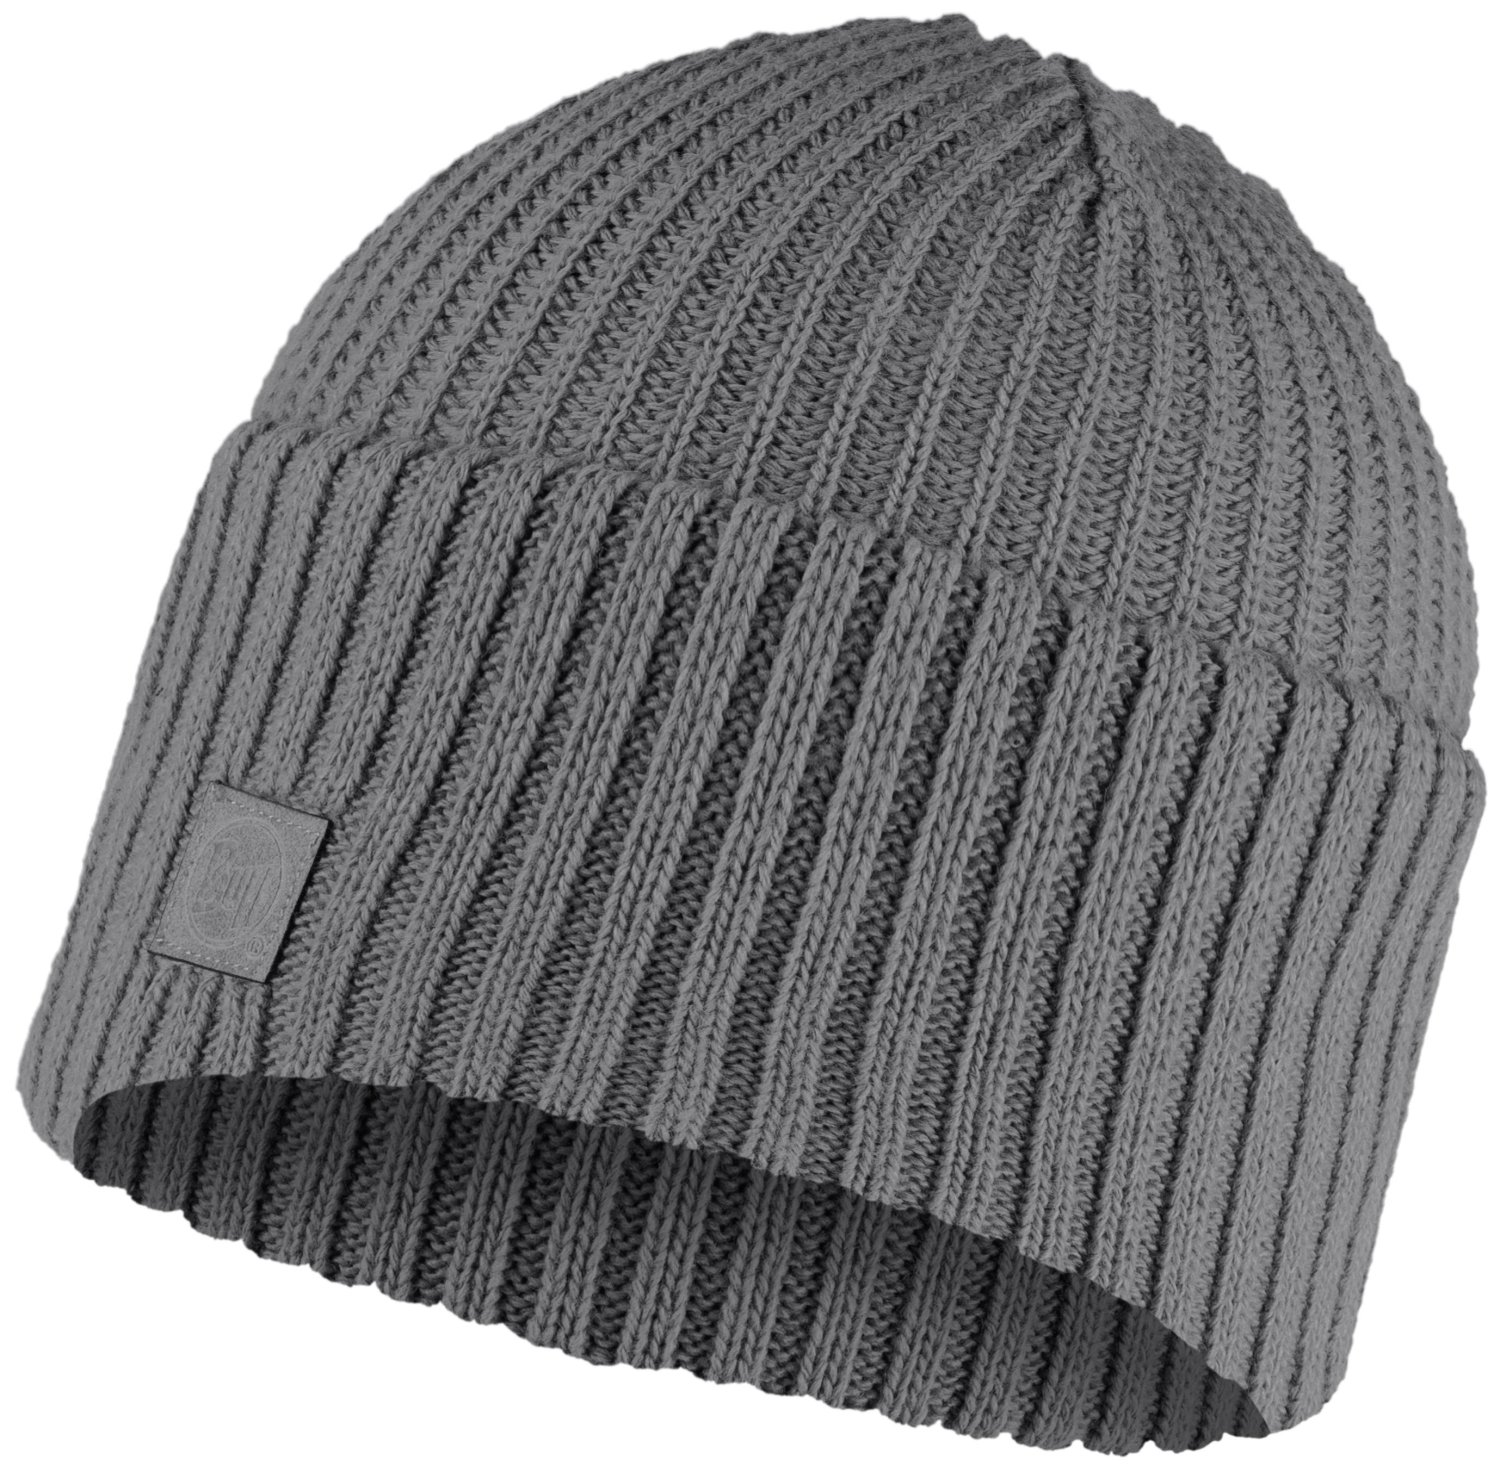 Шапка Buff Knitted Hat Rutger Grey Heather US:one size, 129694.938.10.00 купить на ЖДБЗ.ру